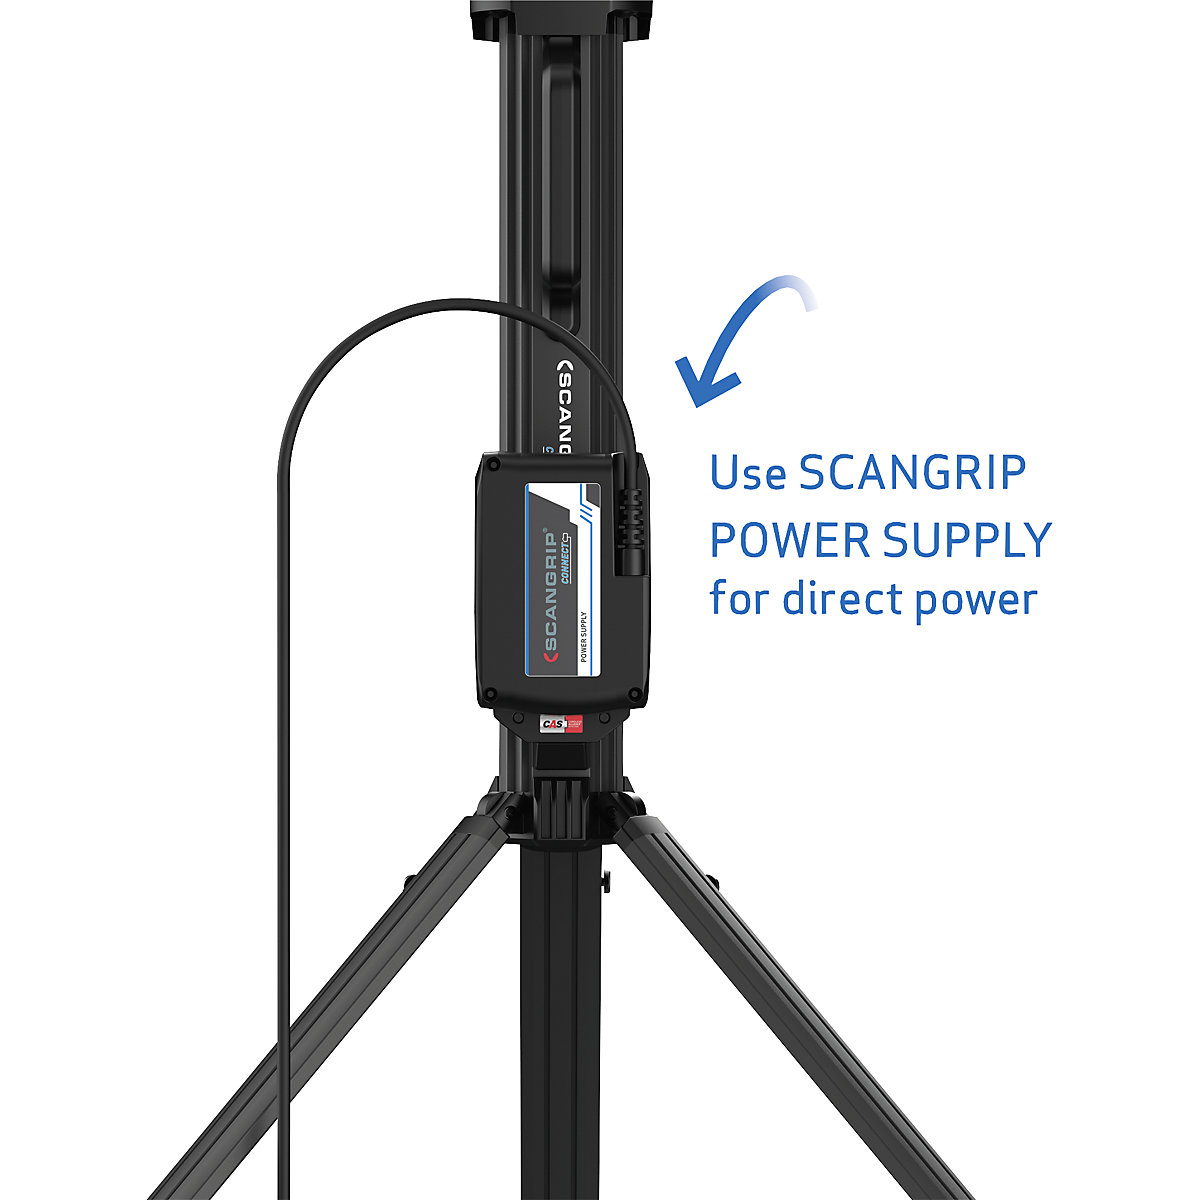 Građevinski LED reflektor TOWER 5 CONNECT – SCANGRIP (Prikaz proizvoda 12)-11